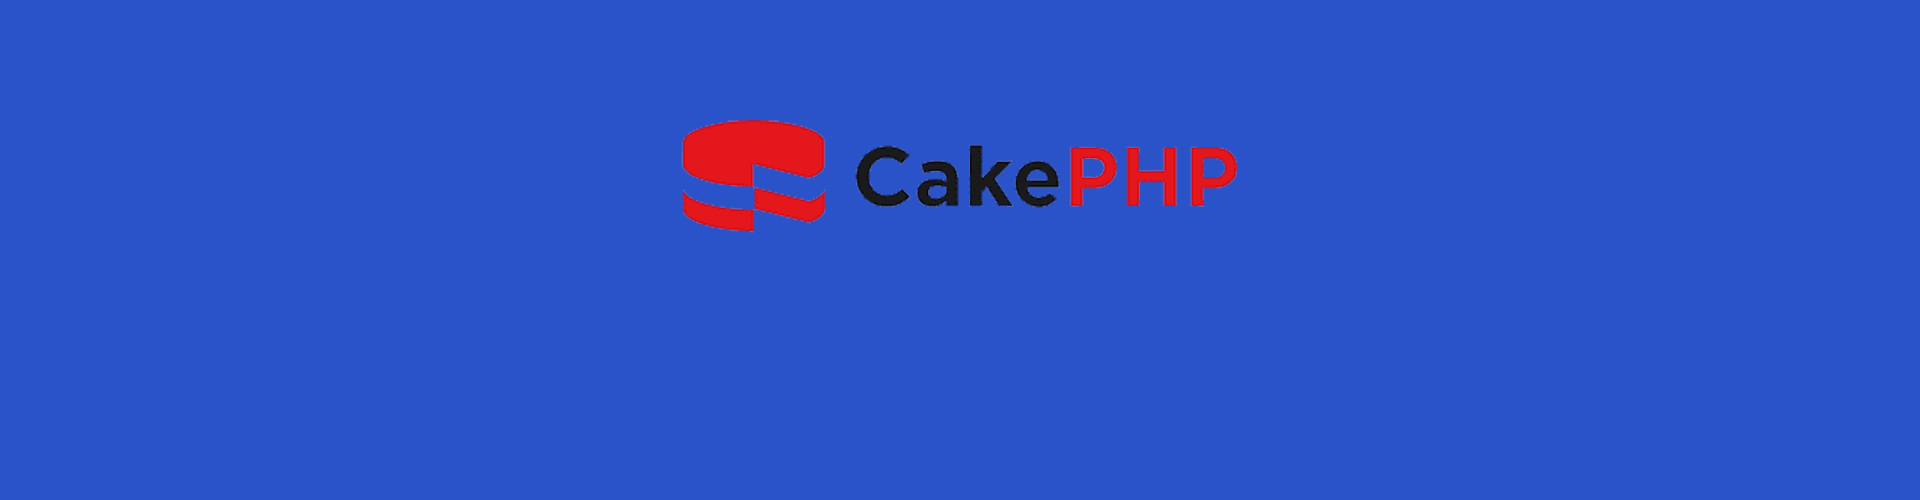 CakePhp Technology